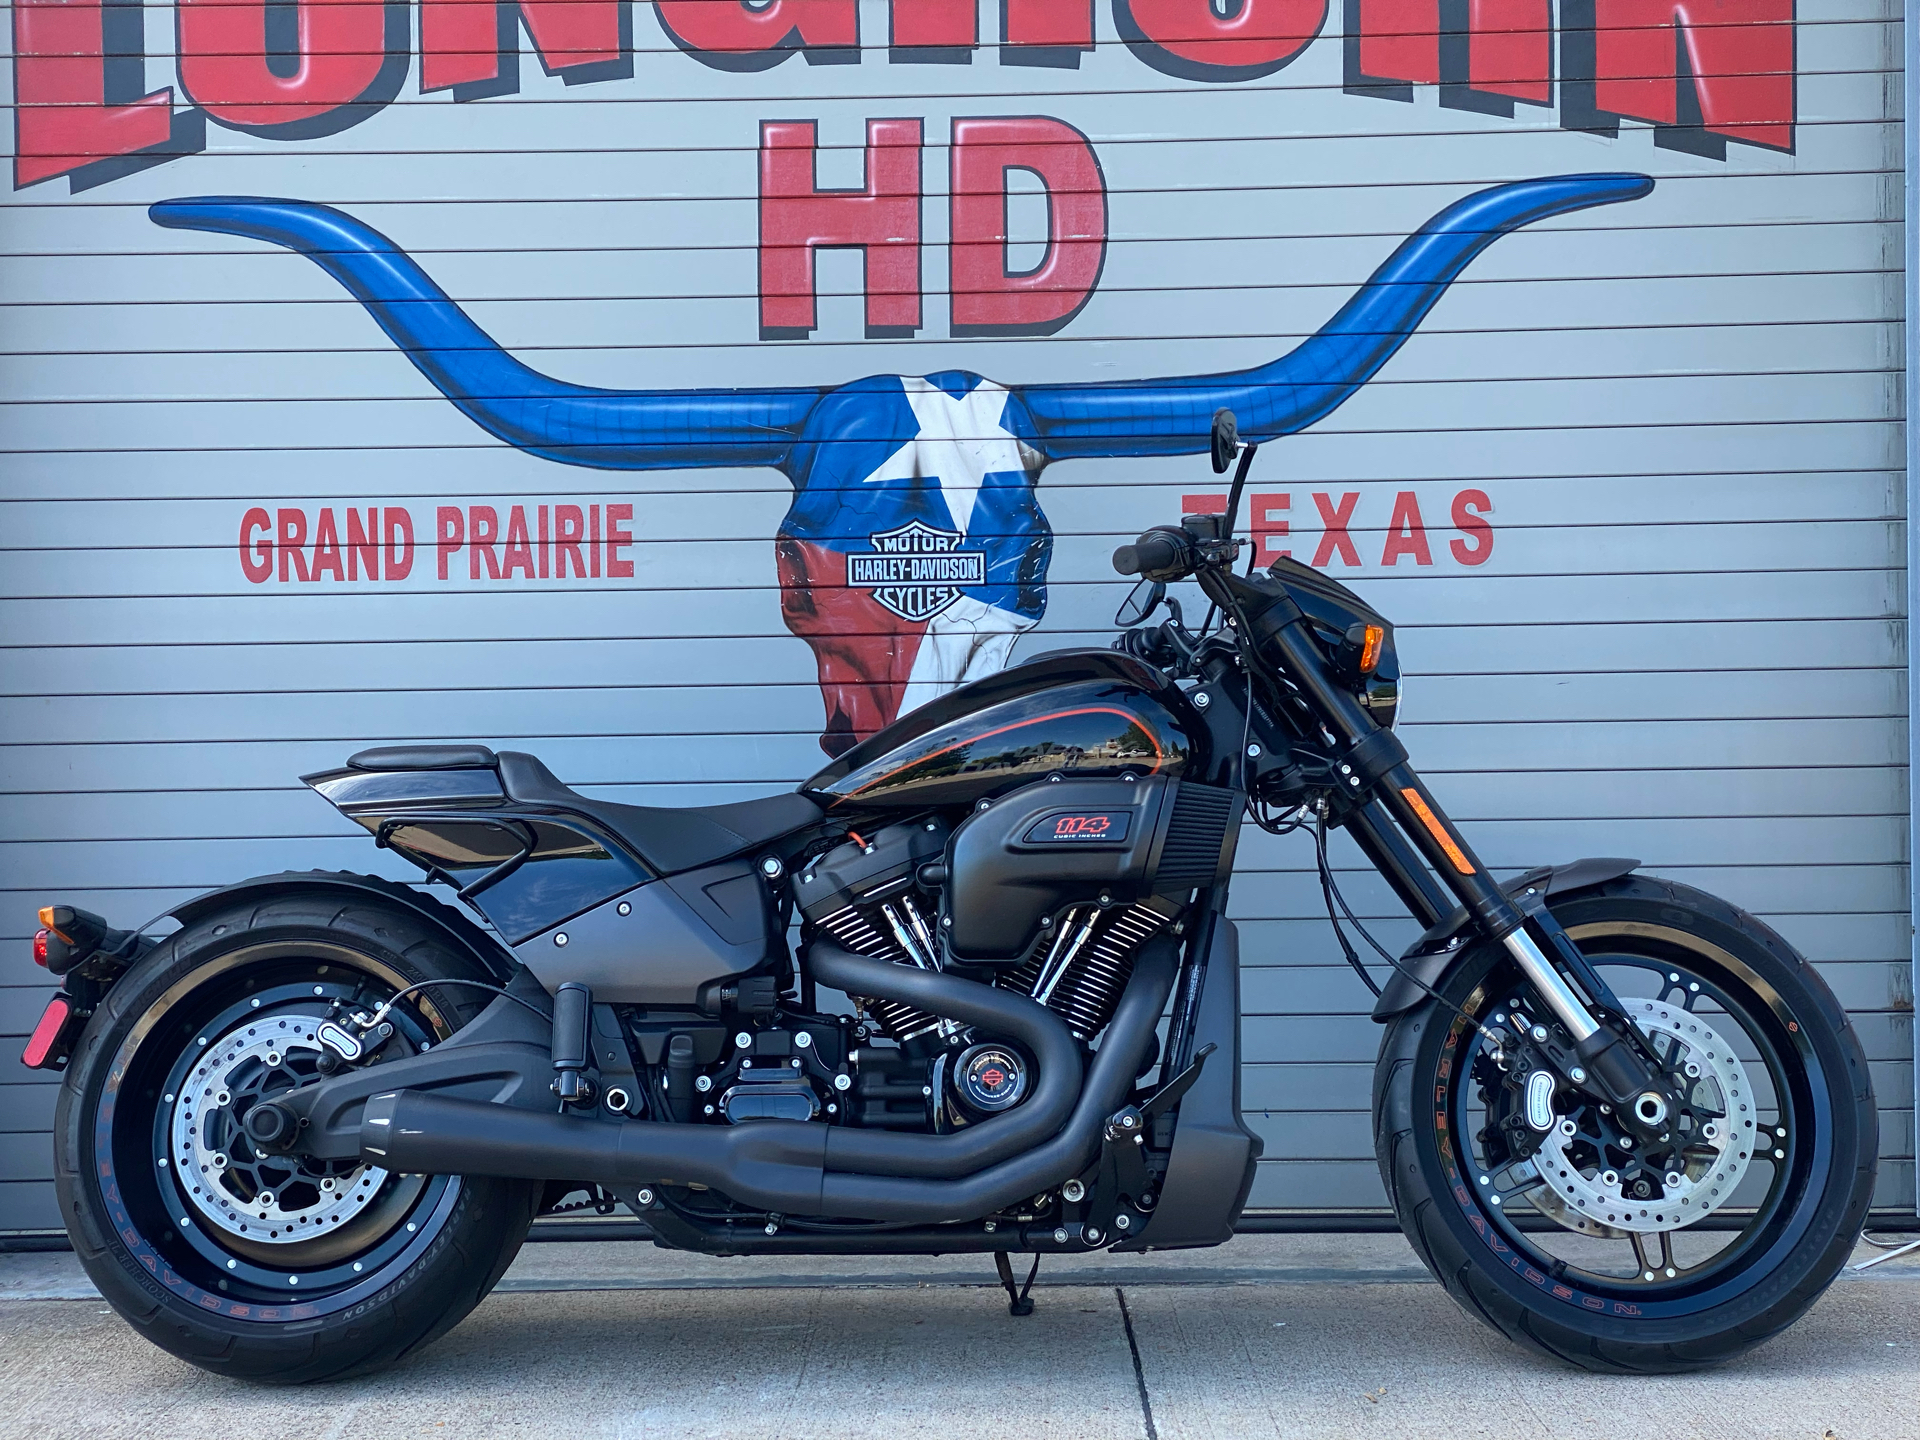 2019 Harley-Davidson FXDR™ 114 in Grand Prairie, Texas - Photo 3